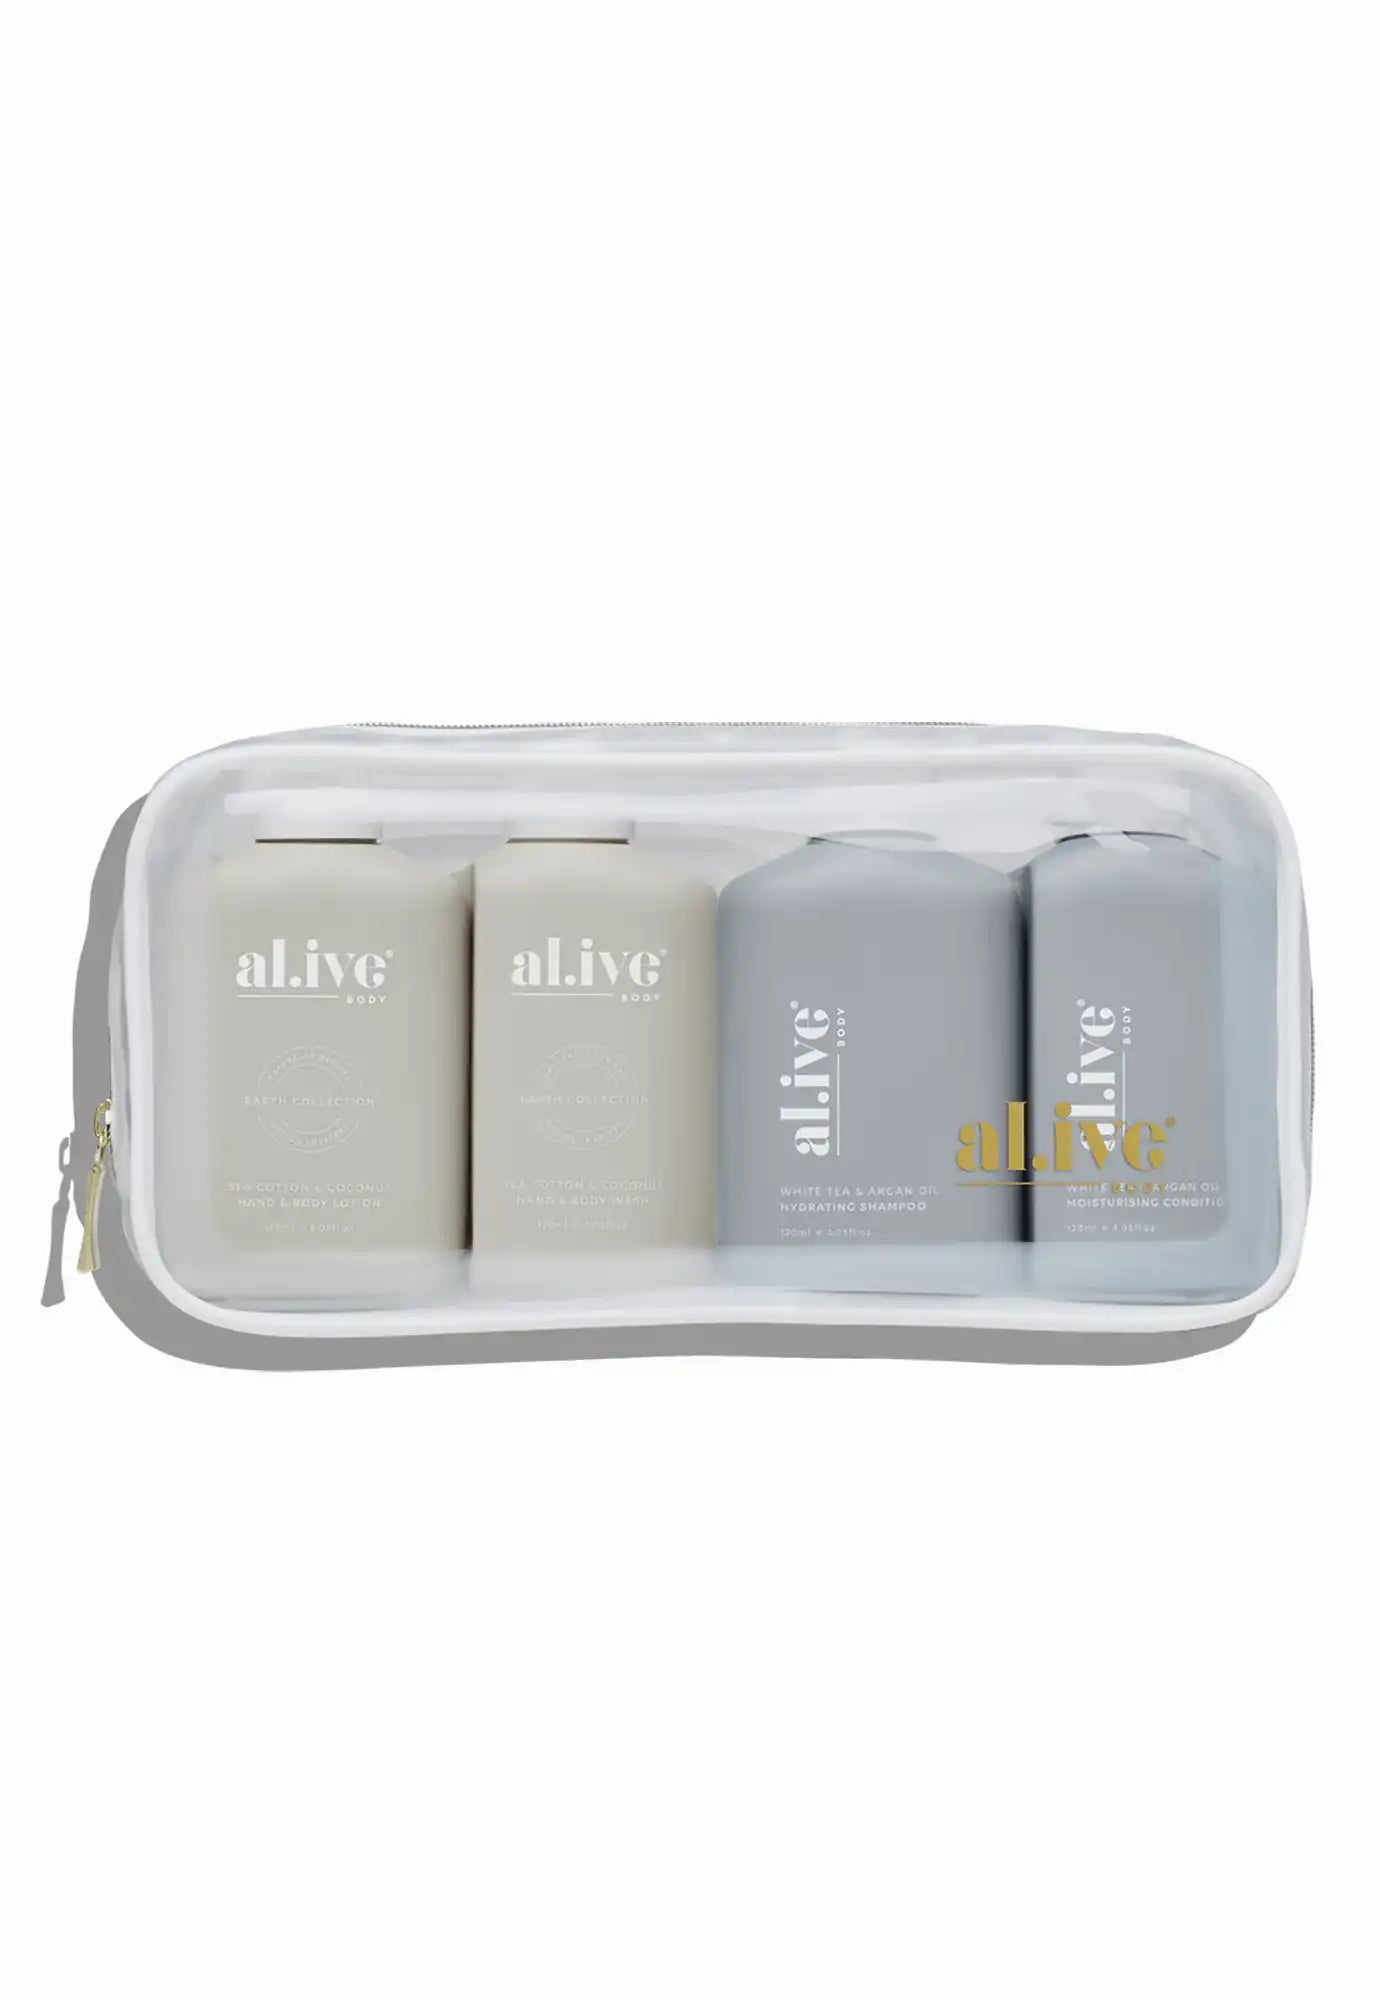 al.ive - hair & body travel pack